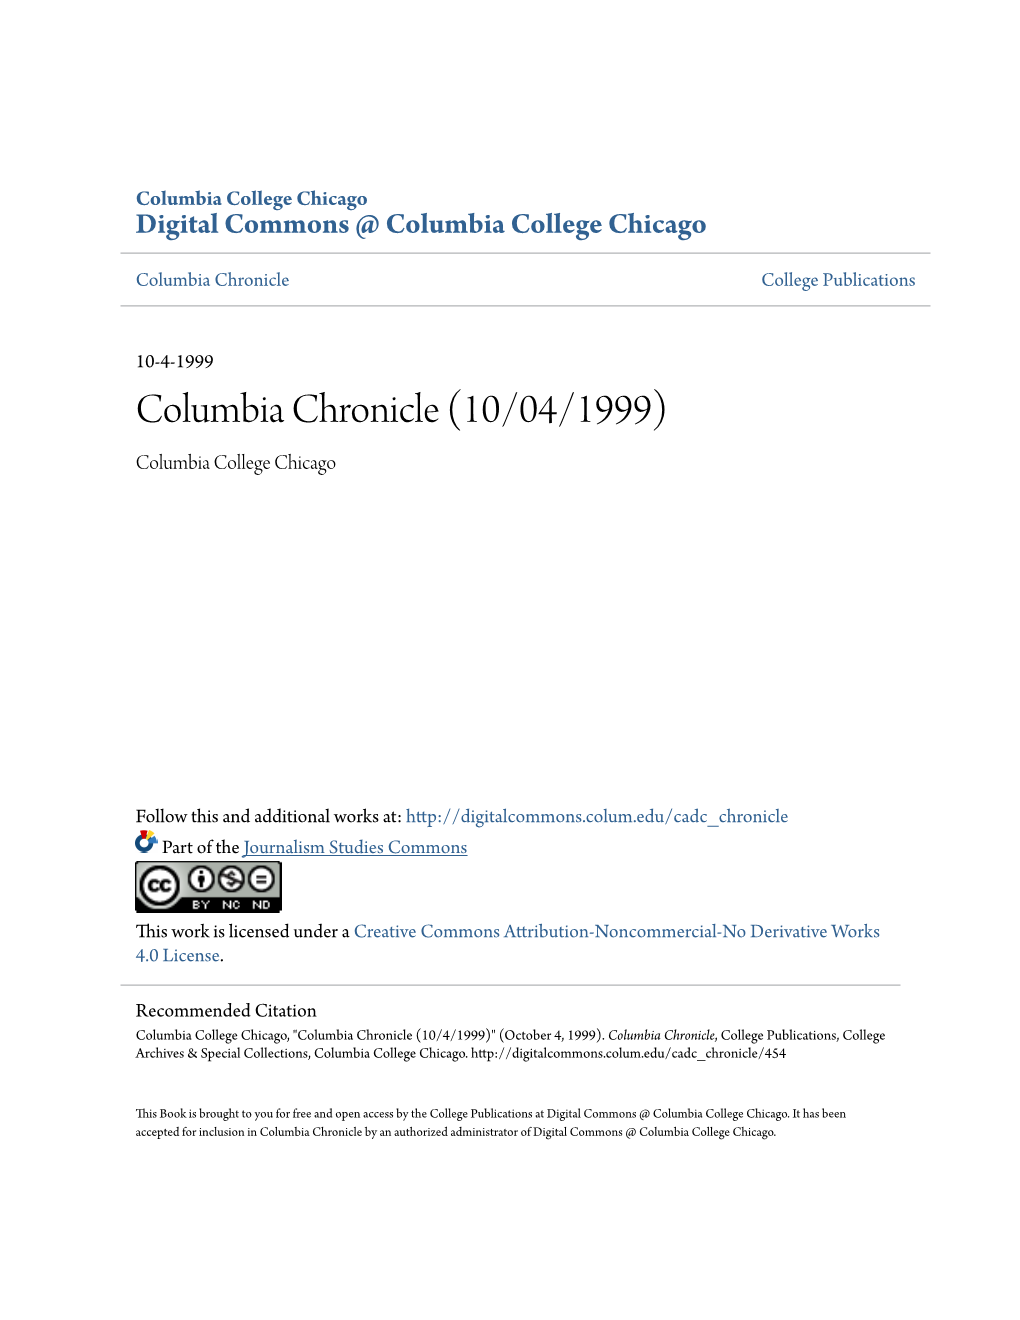 Columbia Chronicle (10/04/1999) Columbia College Chicago